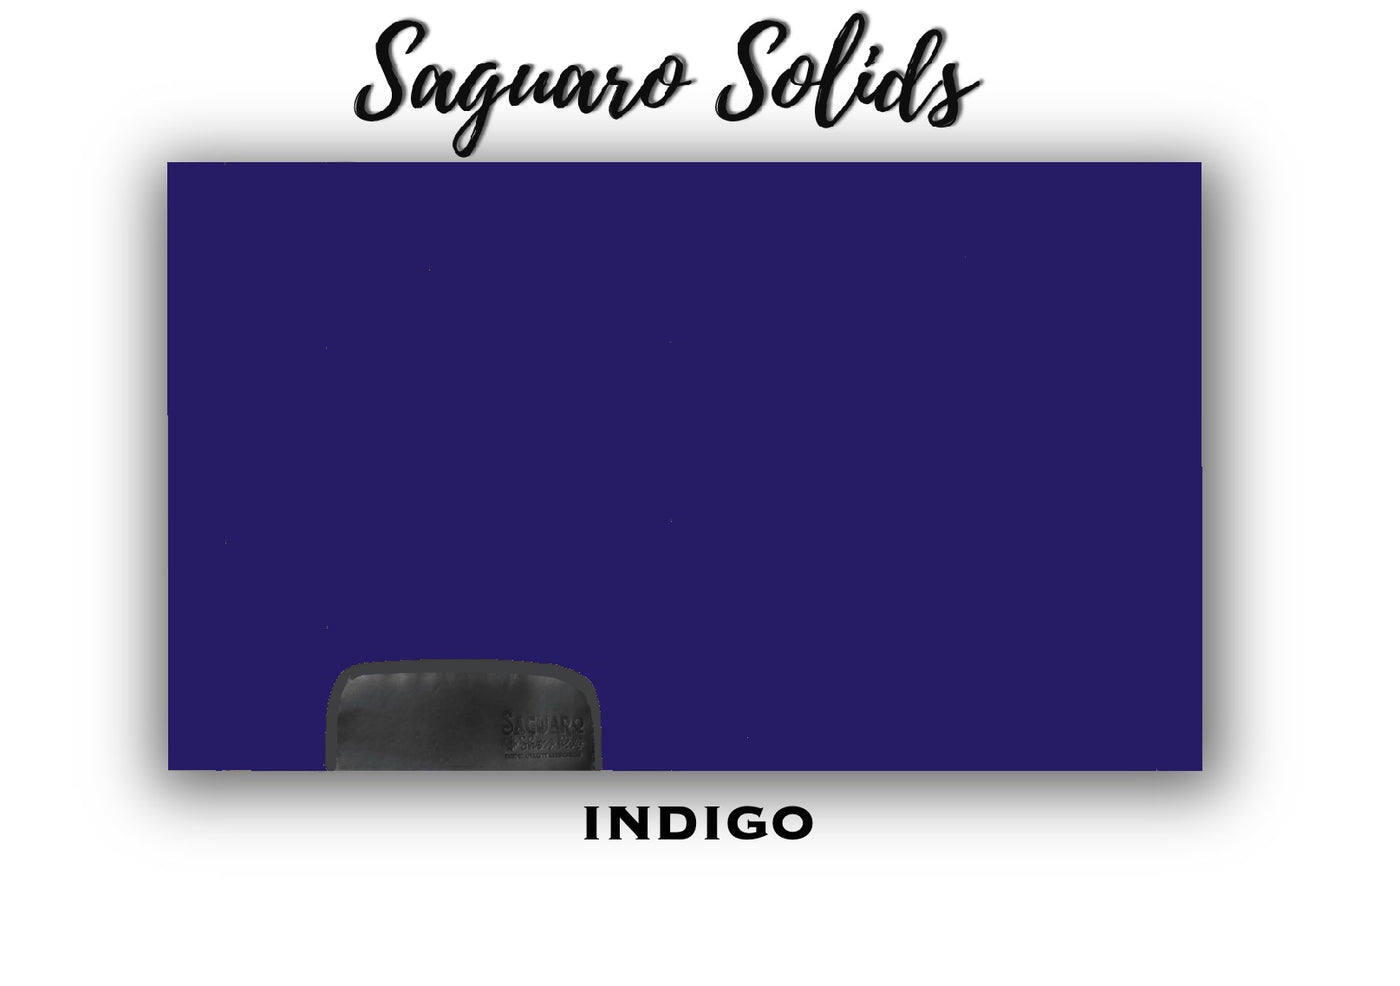 Saguaro Solid "Indigo" Show Pad (SEMI-CUSTOM)